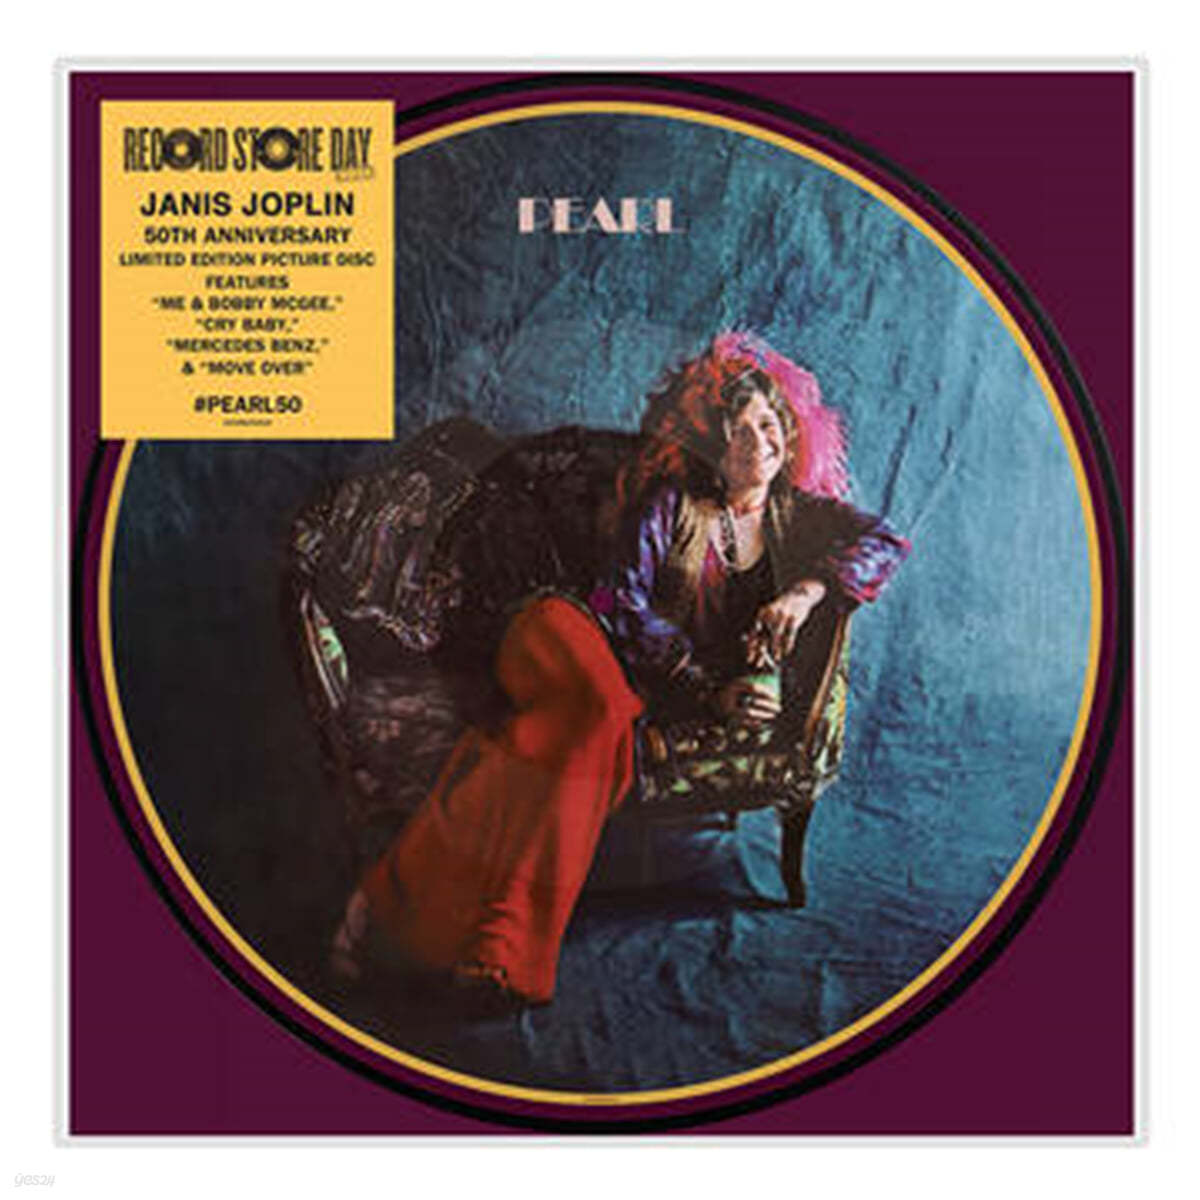 Janis Joplin (재니스 조플린) - Pearl [픽쳐 디스크 LP]